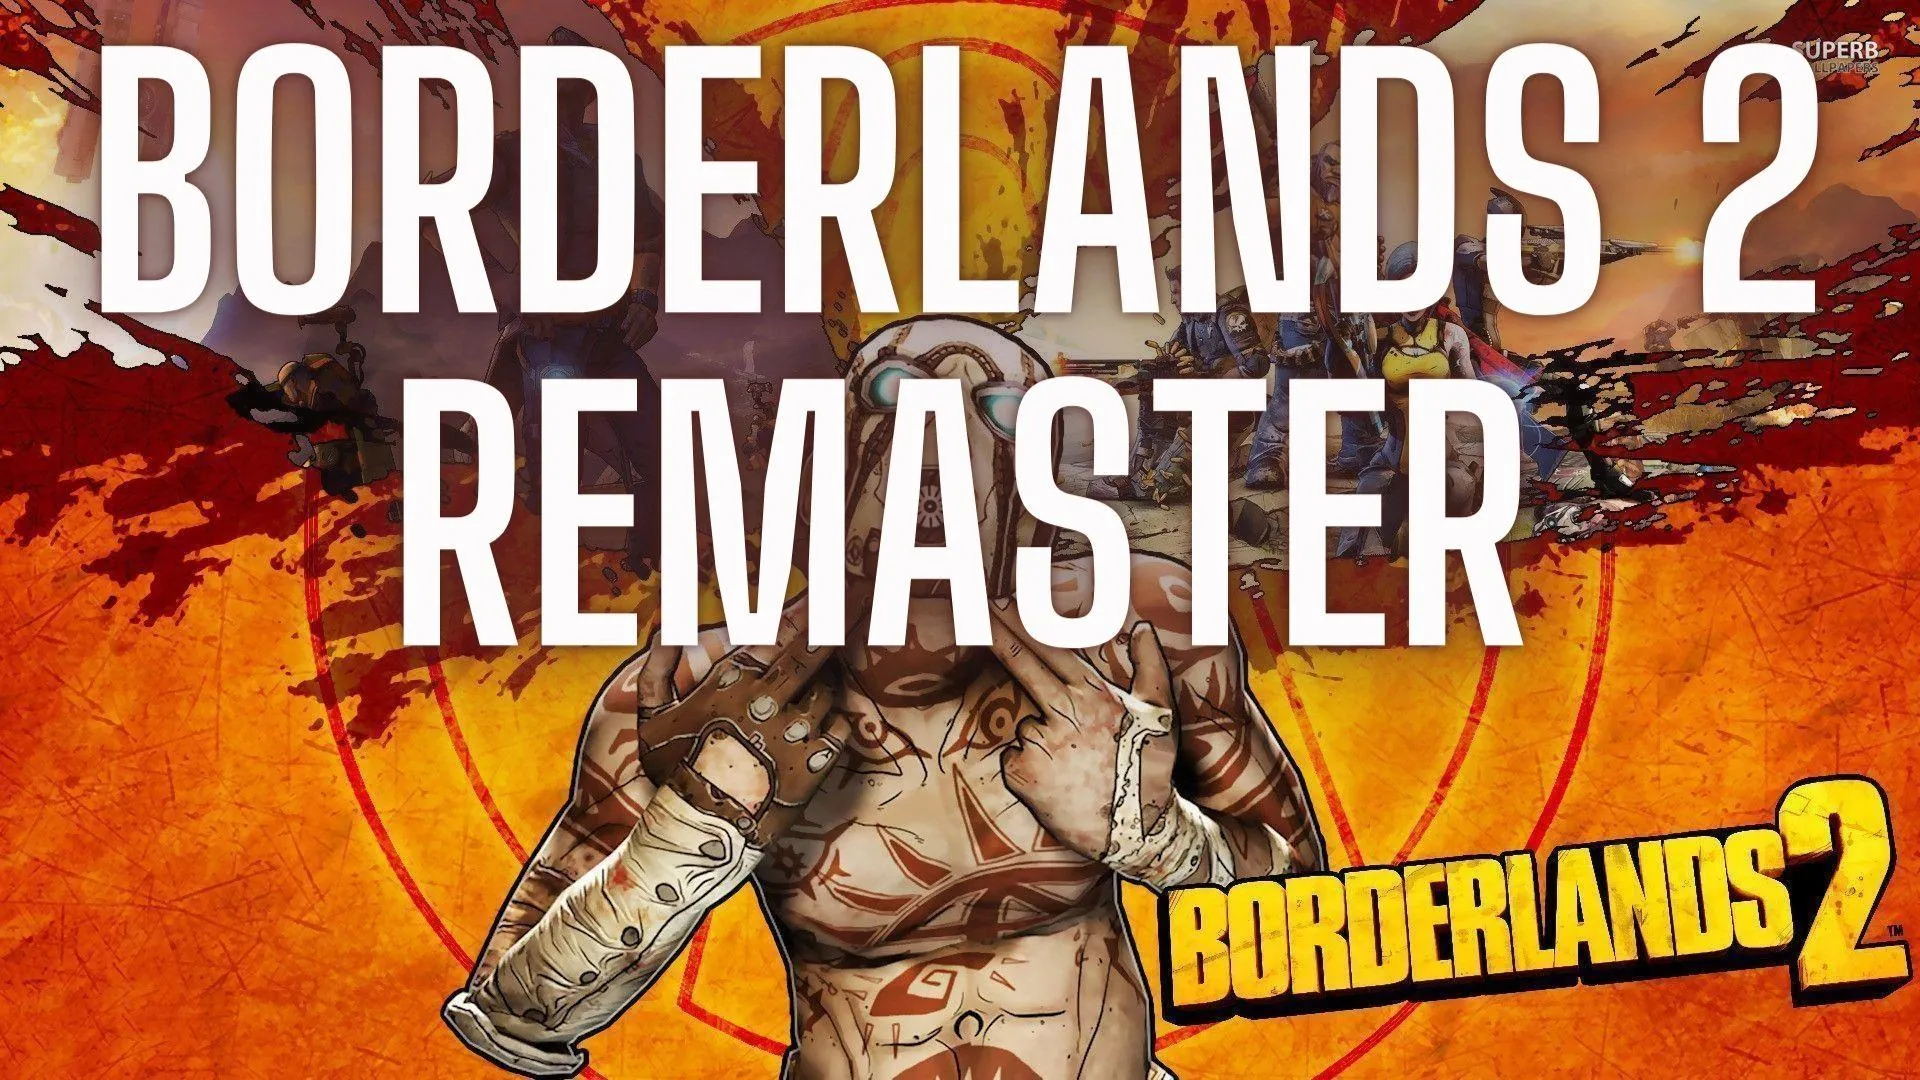 Borderlands 2 Remaster Concept: The Perfect Borderlands Game [Fantasy Booking]